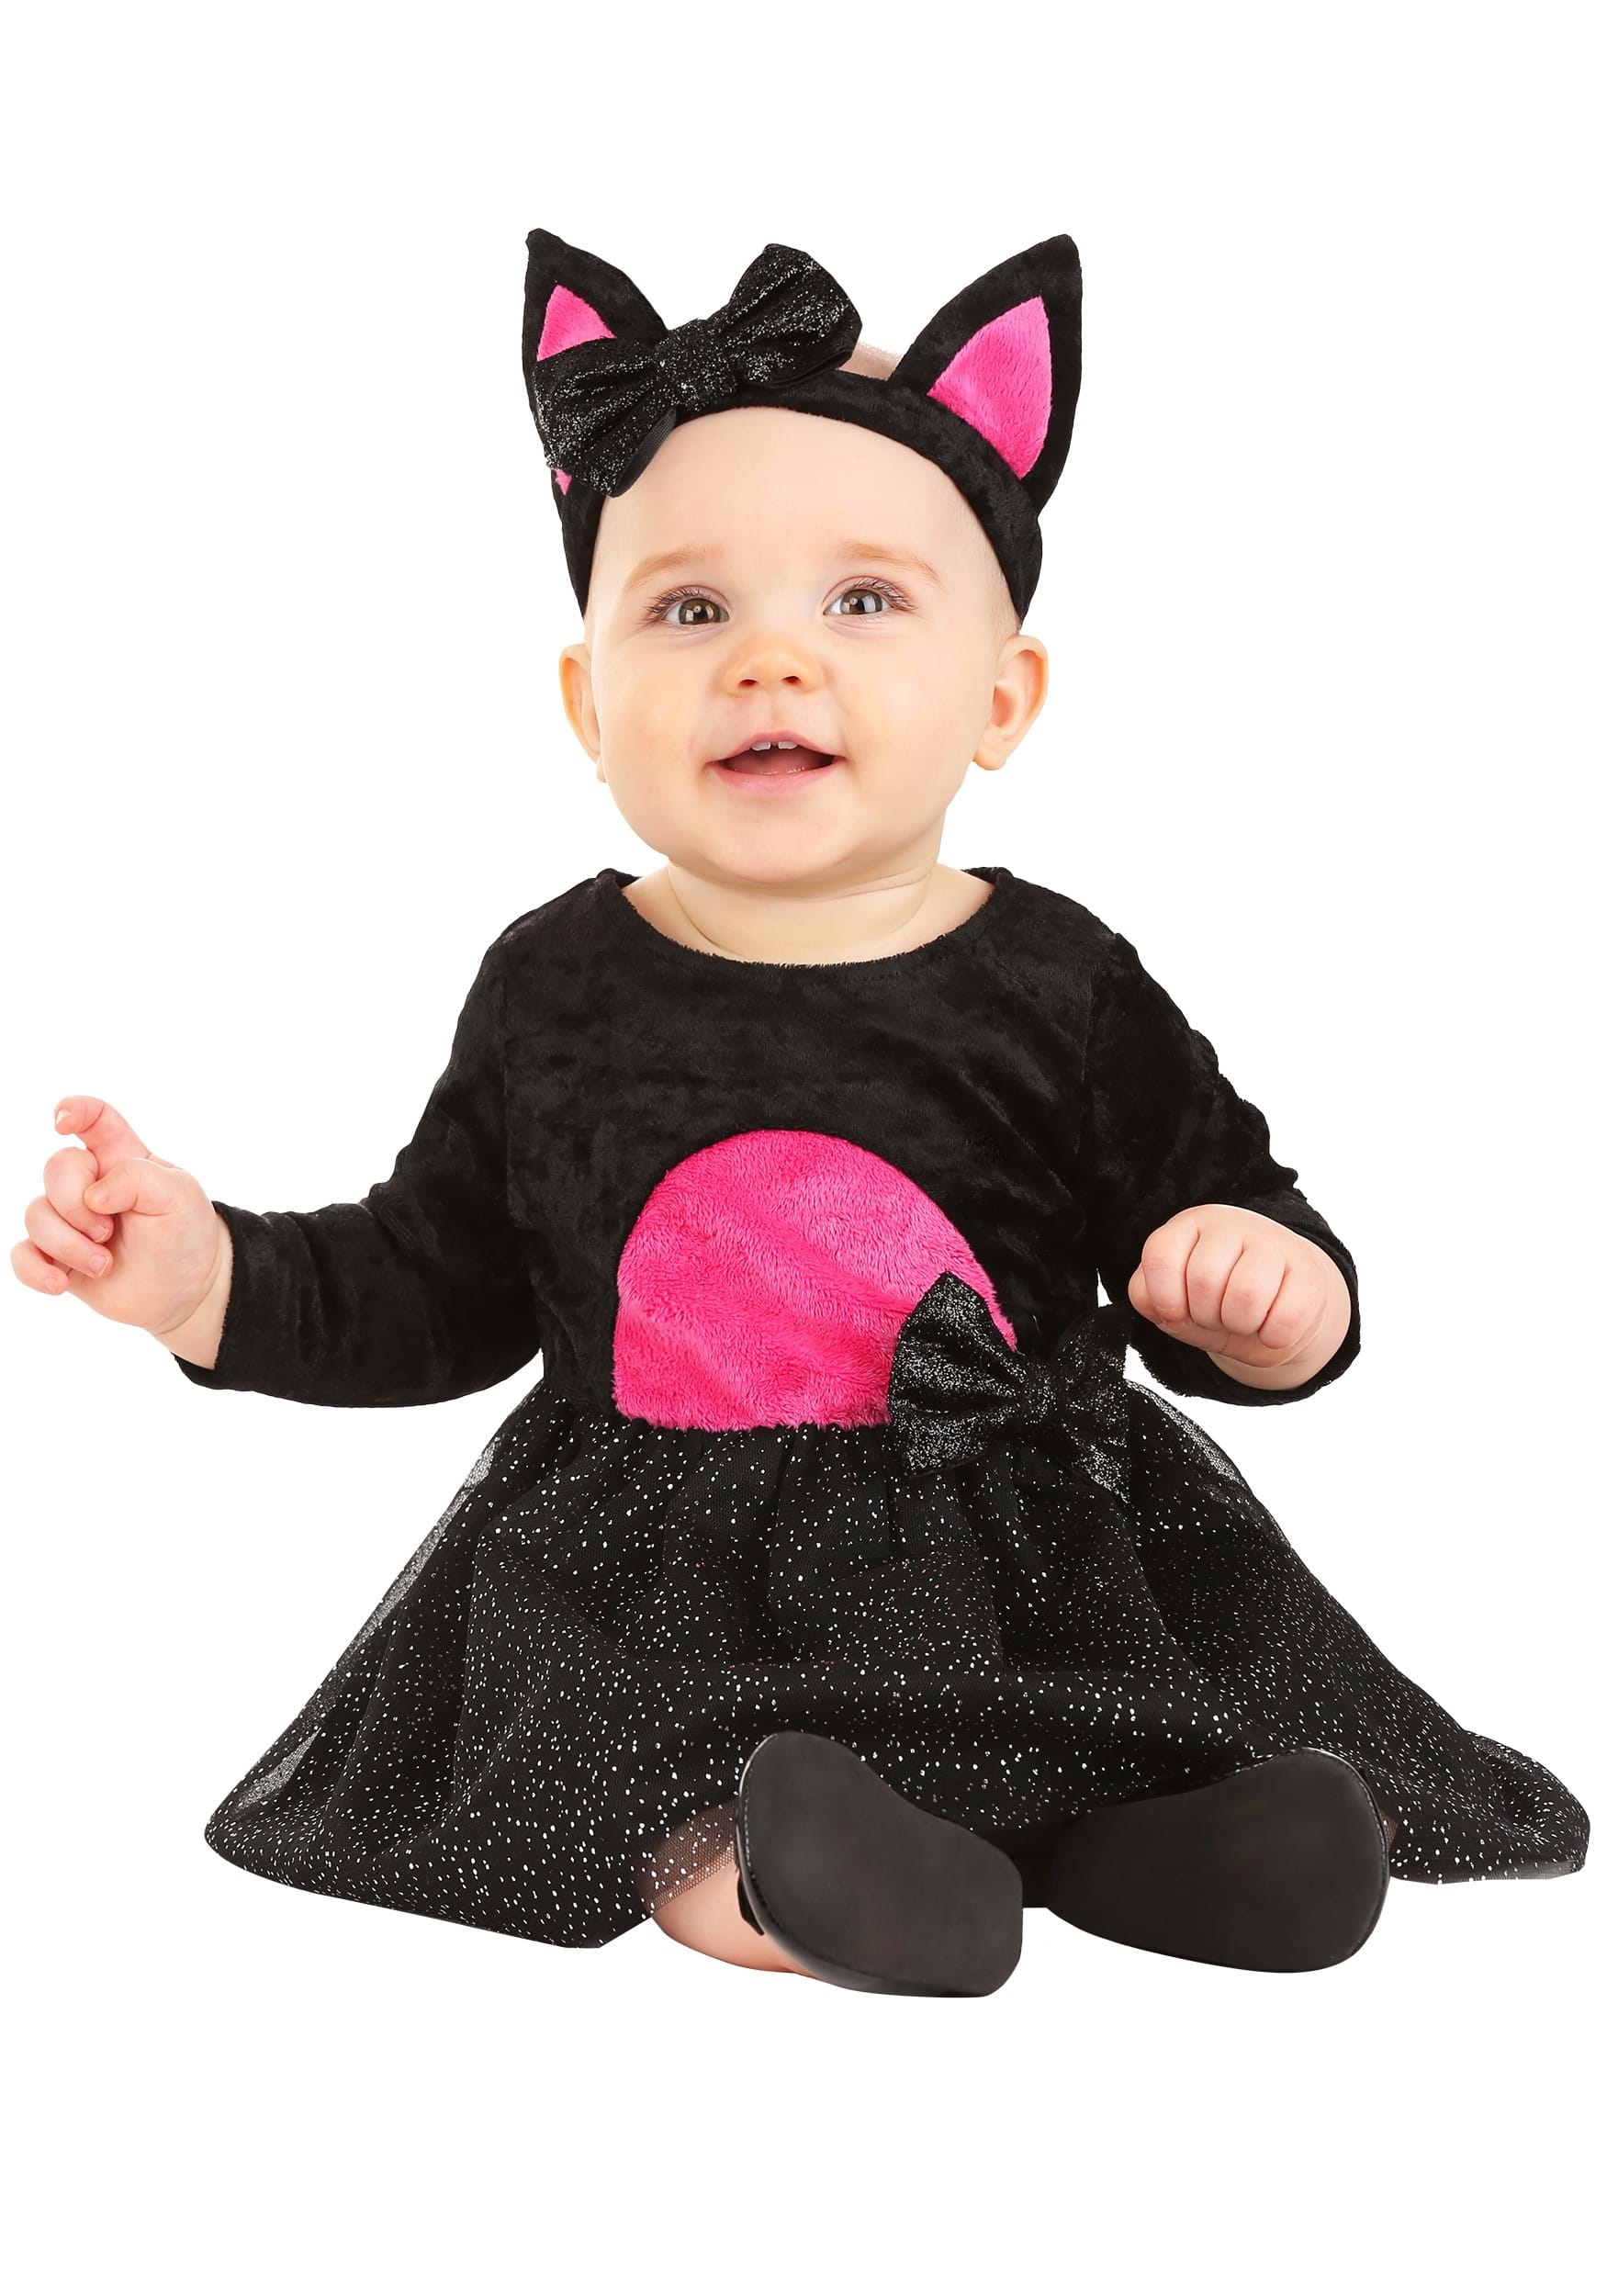 Photos - Fancy Dress CATerpillar FUN Costumes Kitty Cat Infant Costume Black/Pink FUN2420IN 